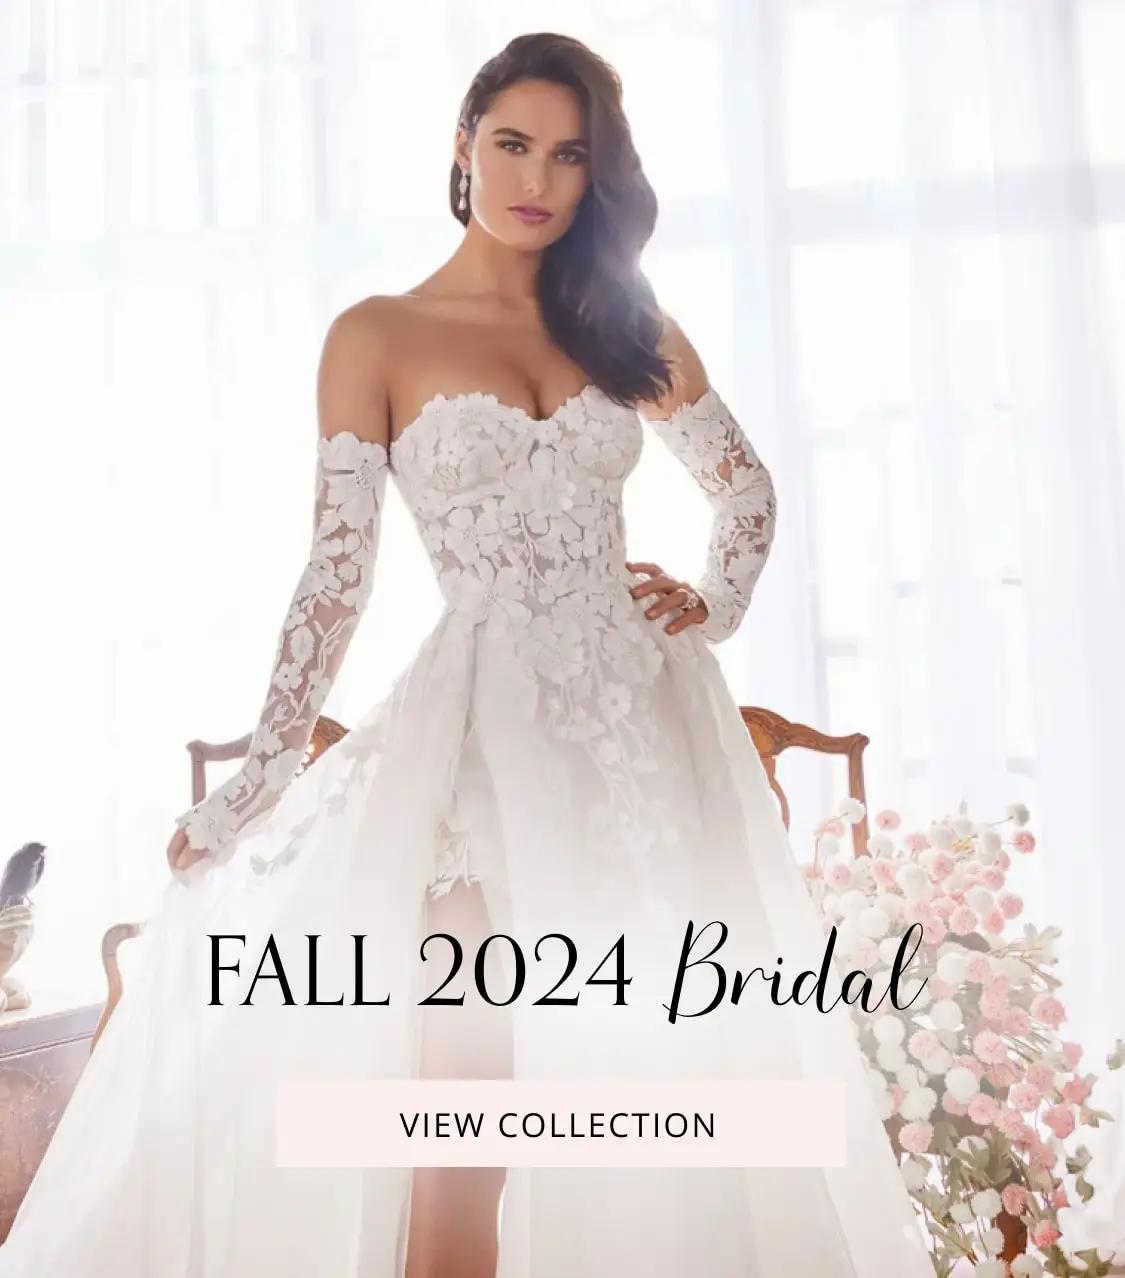 Fall 2024 Bridal Banner Mobile